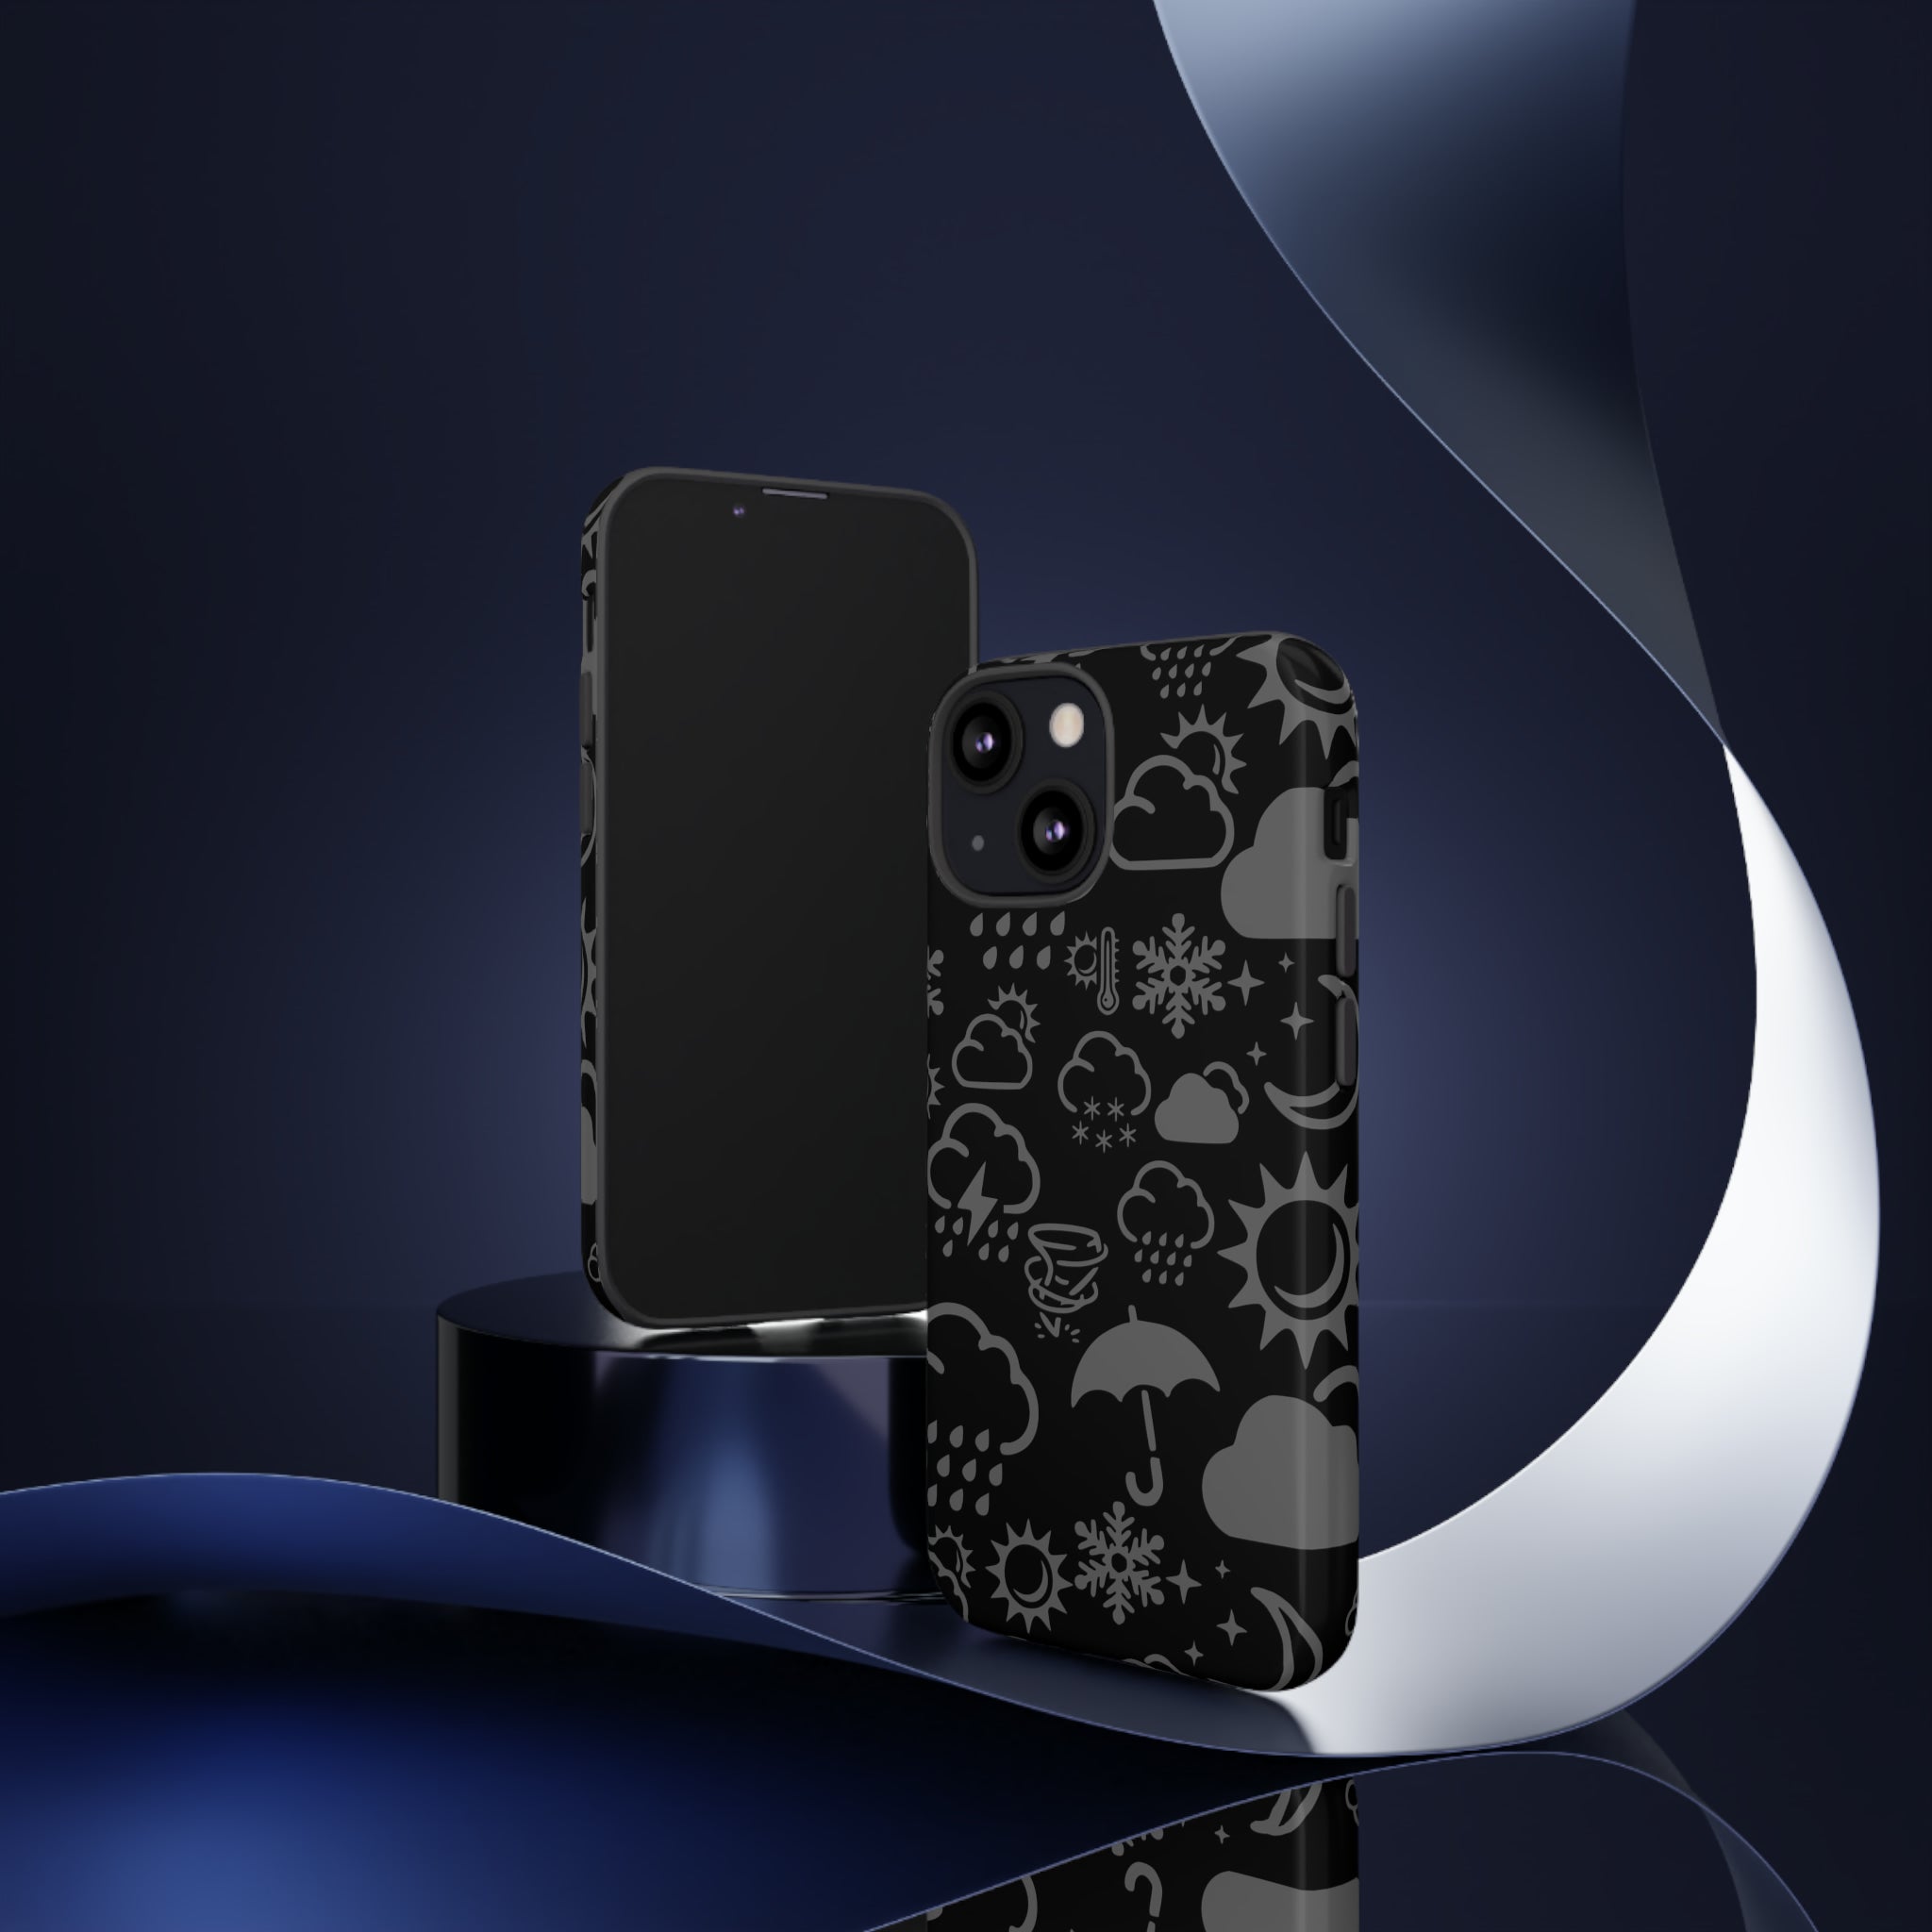 Wx Icon (Black/Gray) Tough Phone Case 